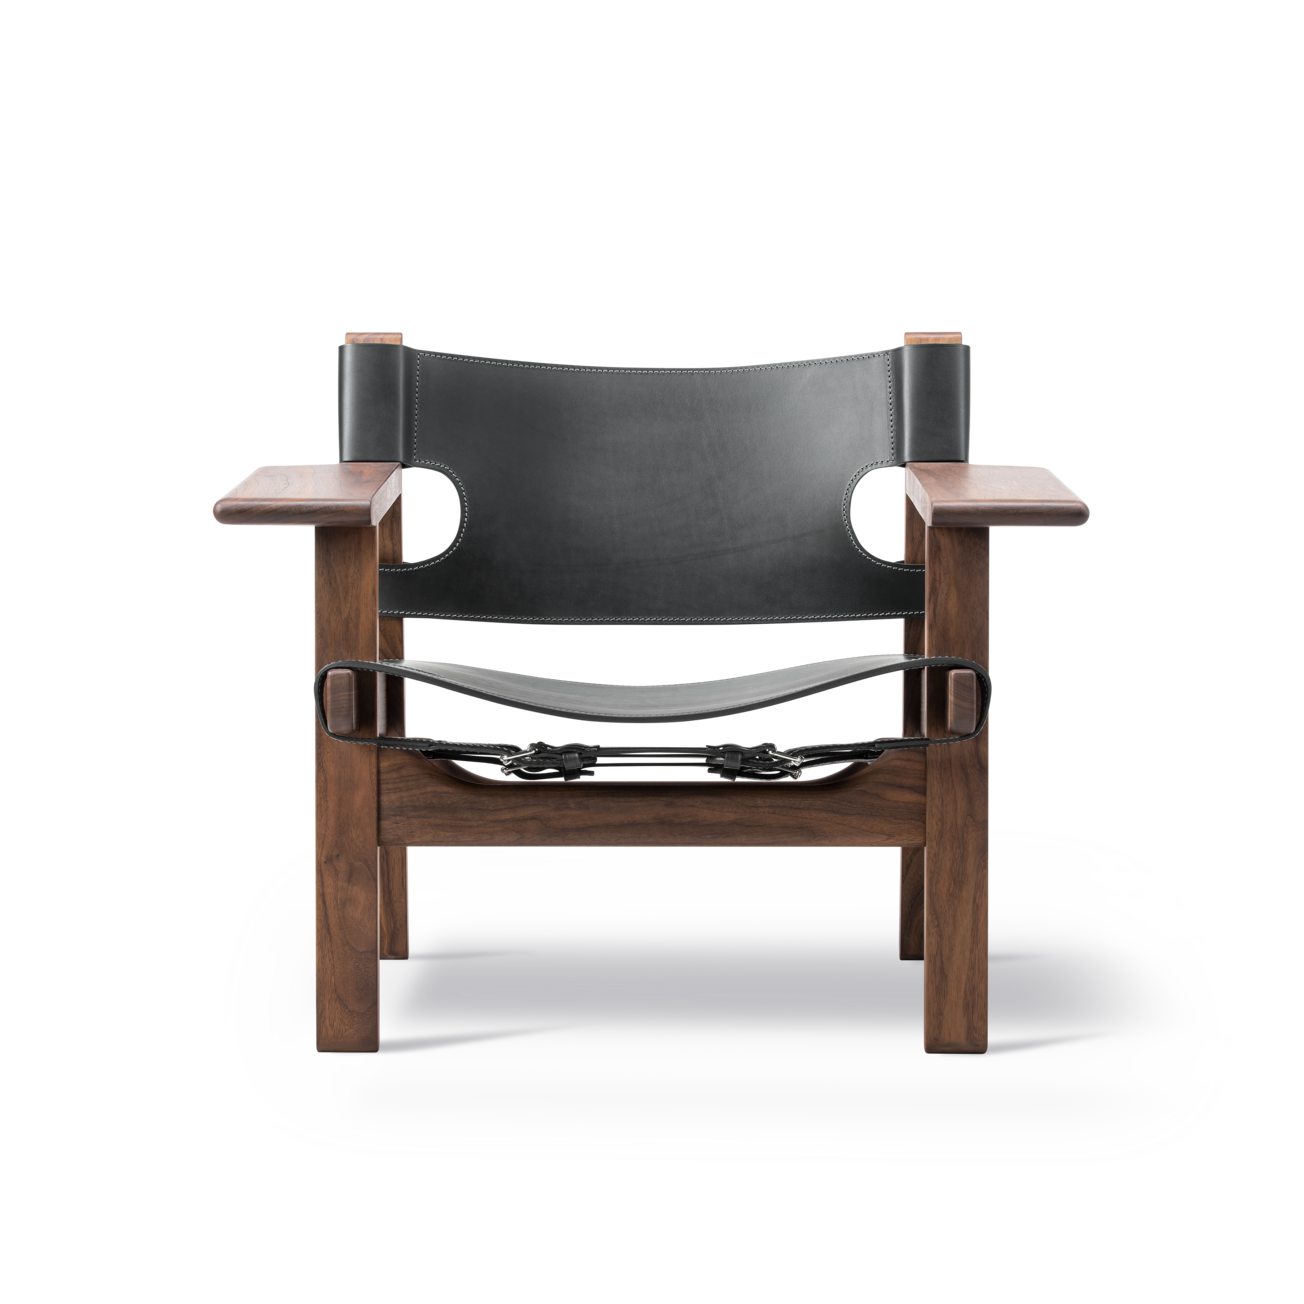 The Spanish Chair